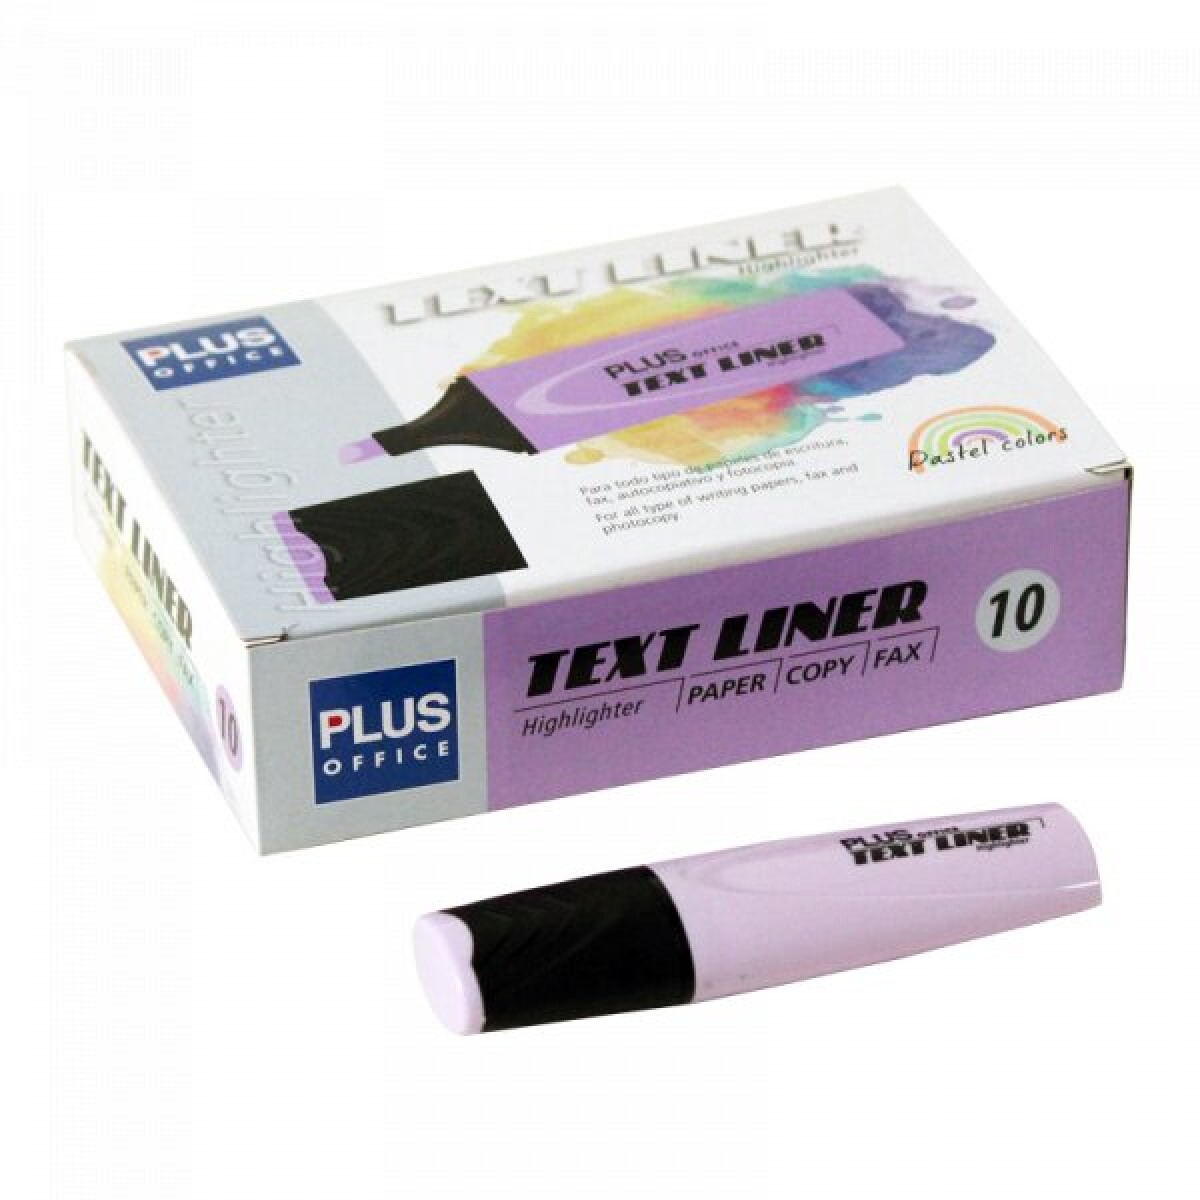 Resaltador Pastel Textliner Plus Office x10 - Violoeta Pastel 